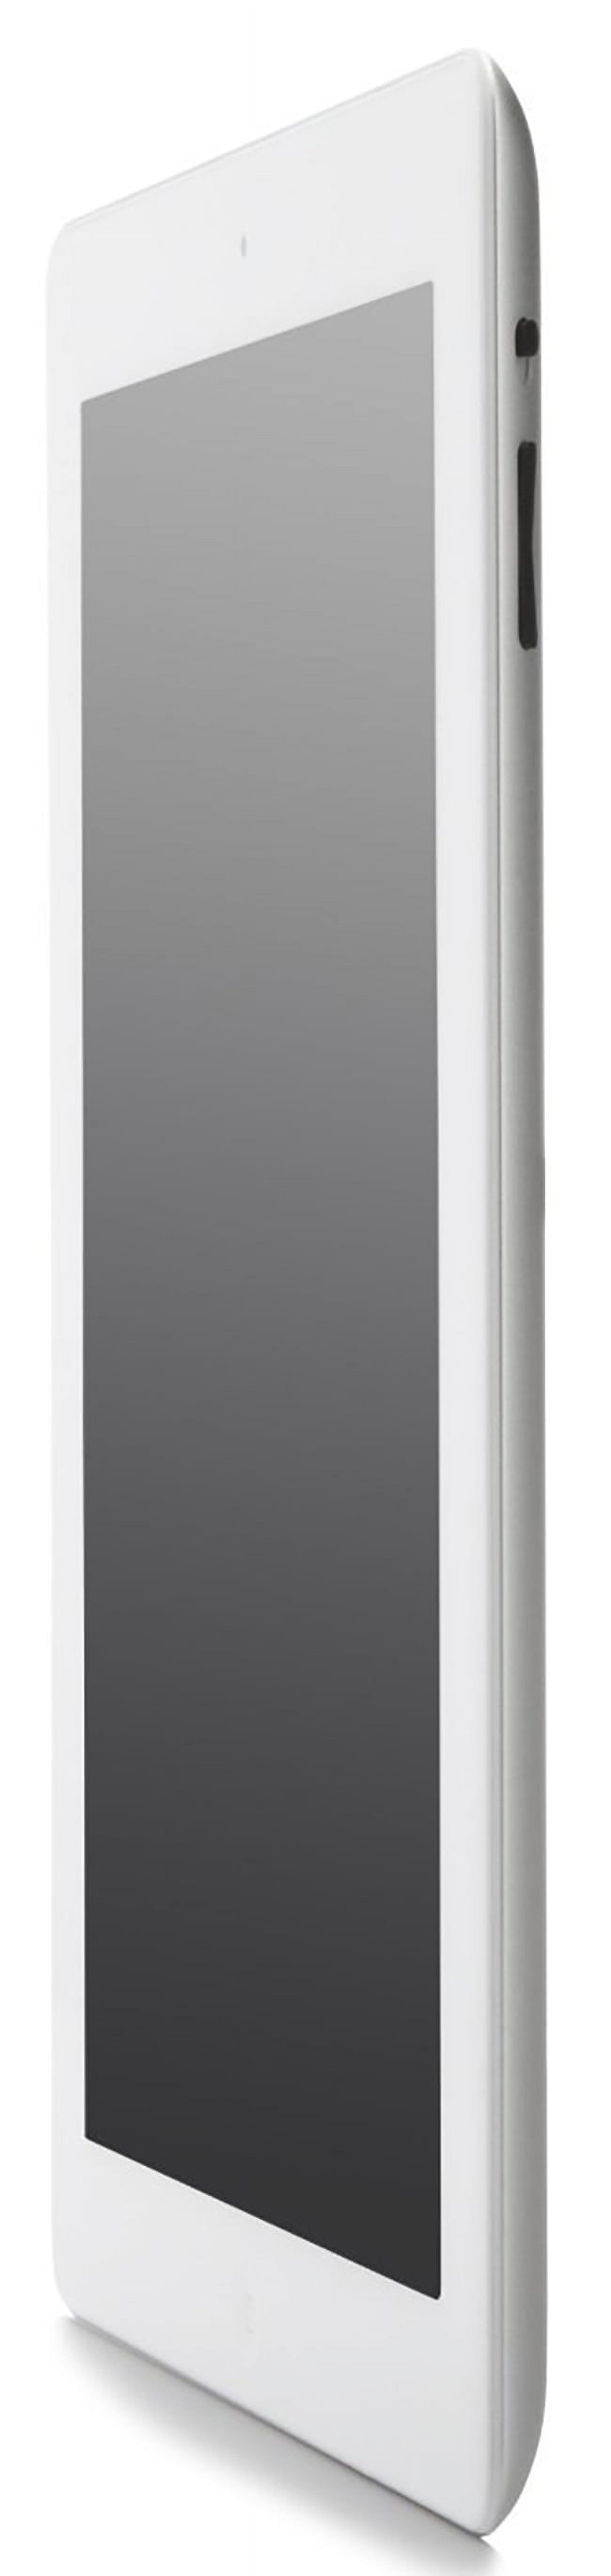 Restored iPad 4 Wifi White 16GB (MD513LL/A)(Late-2012) (Refurbished) - image 5 of 5